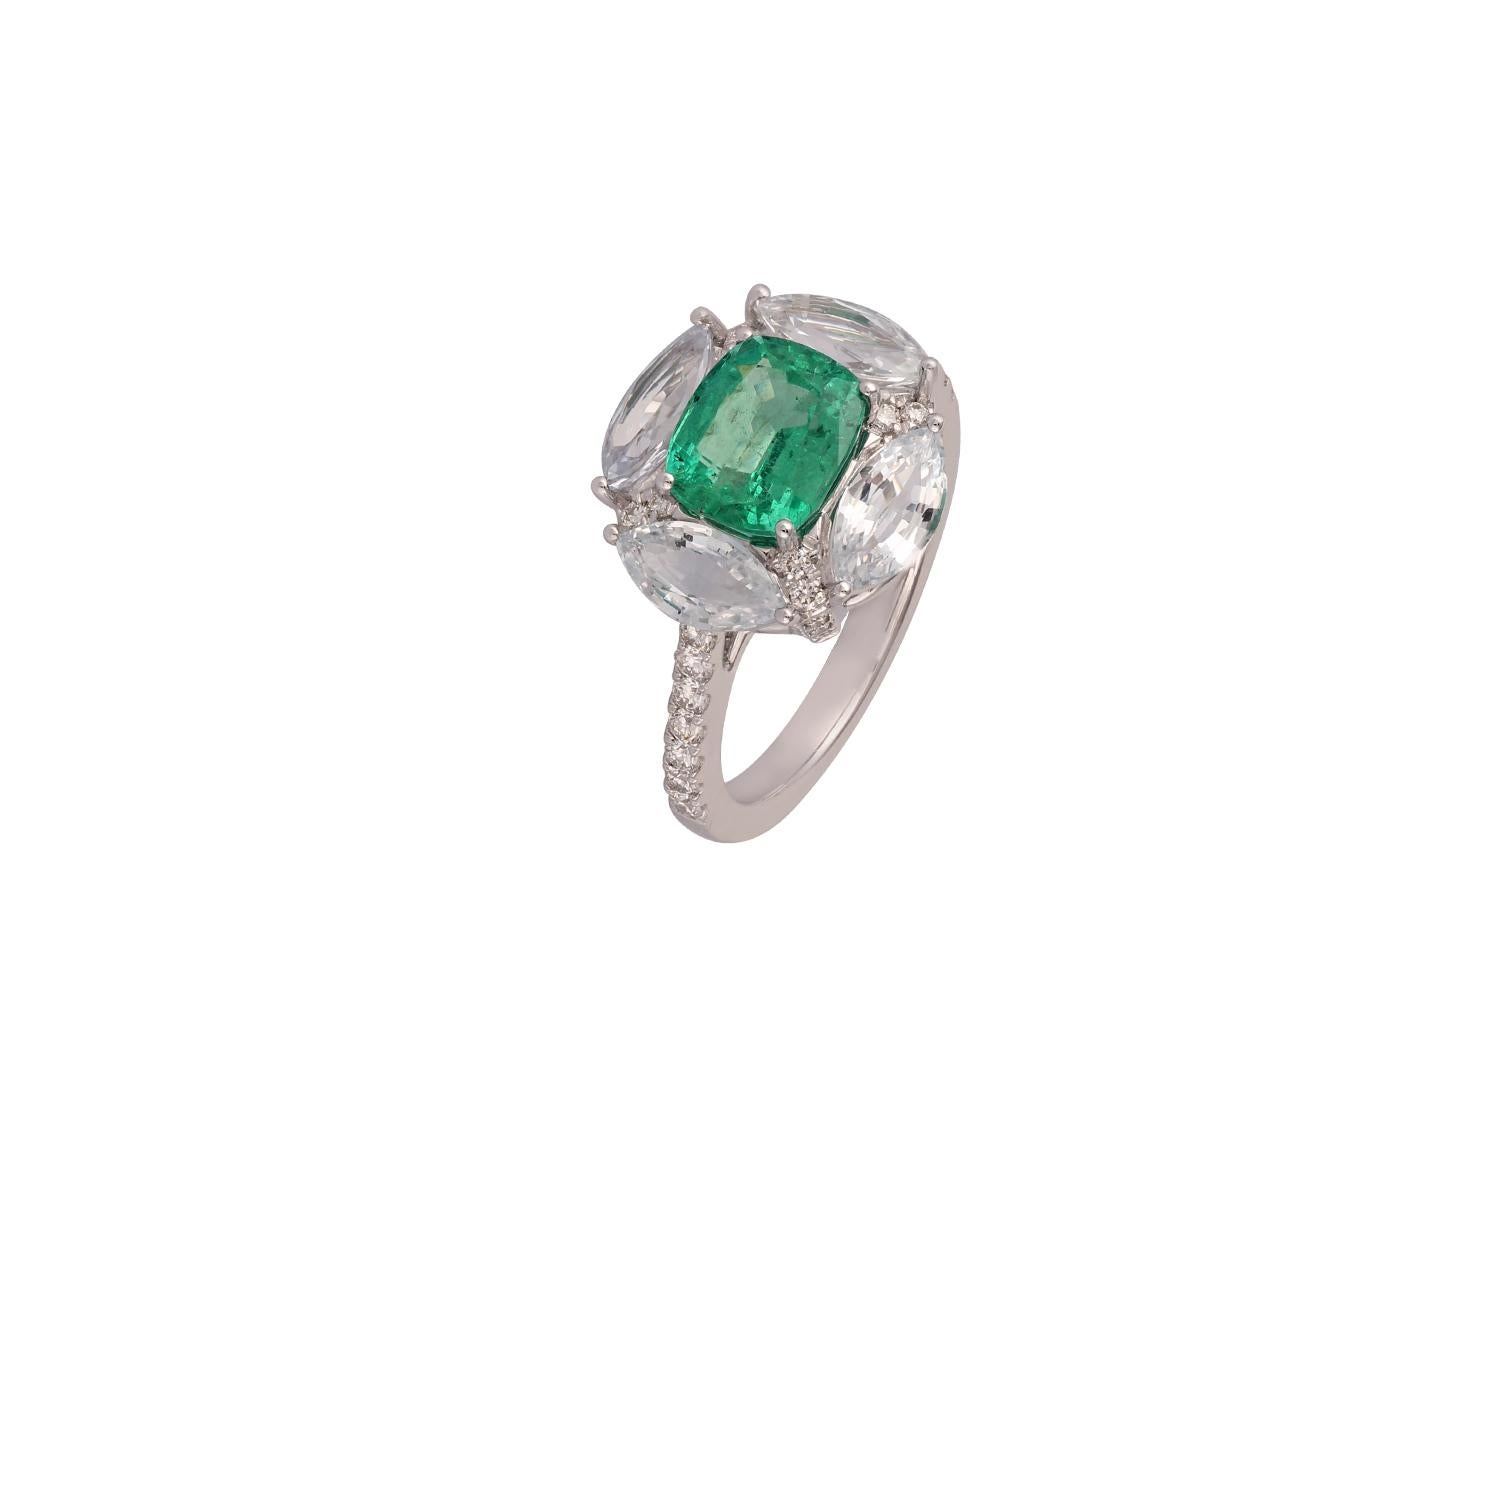 Contemporary Emerald White Sapphire Diamond Ring in 18 Kt White Gold